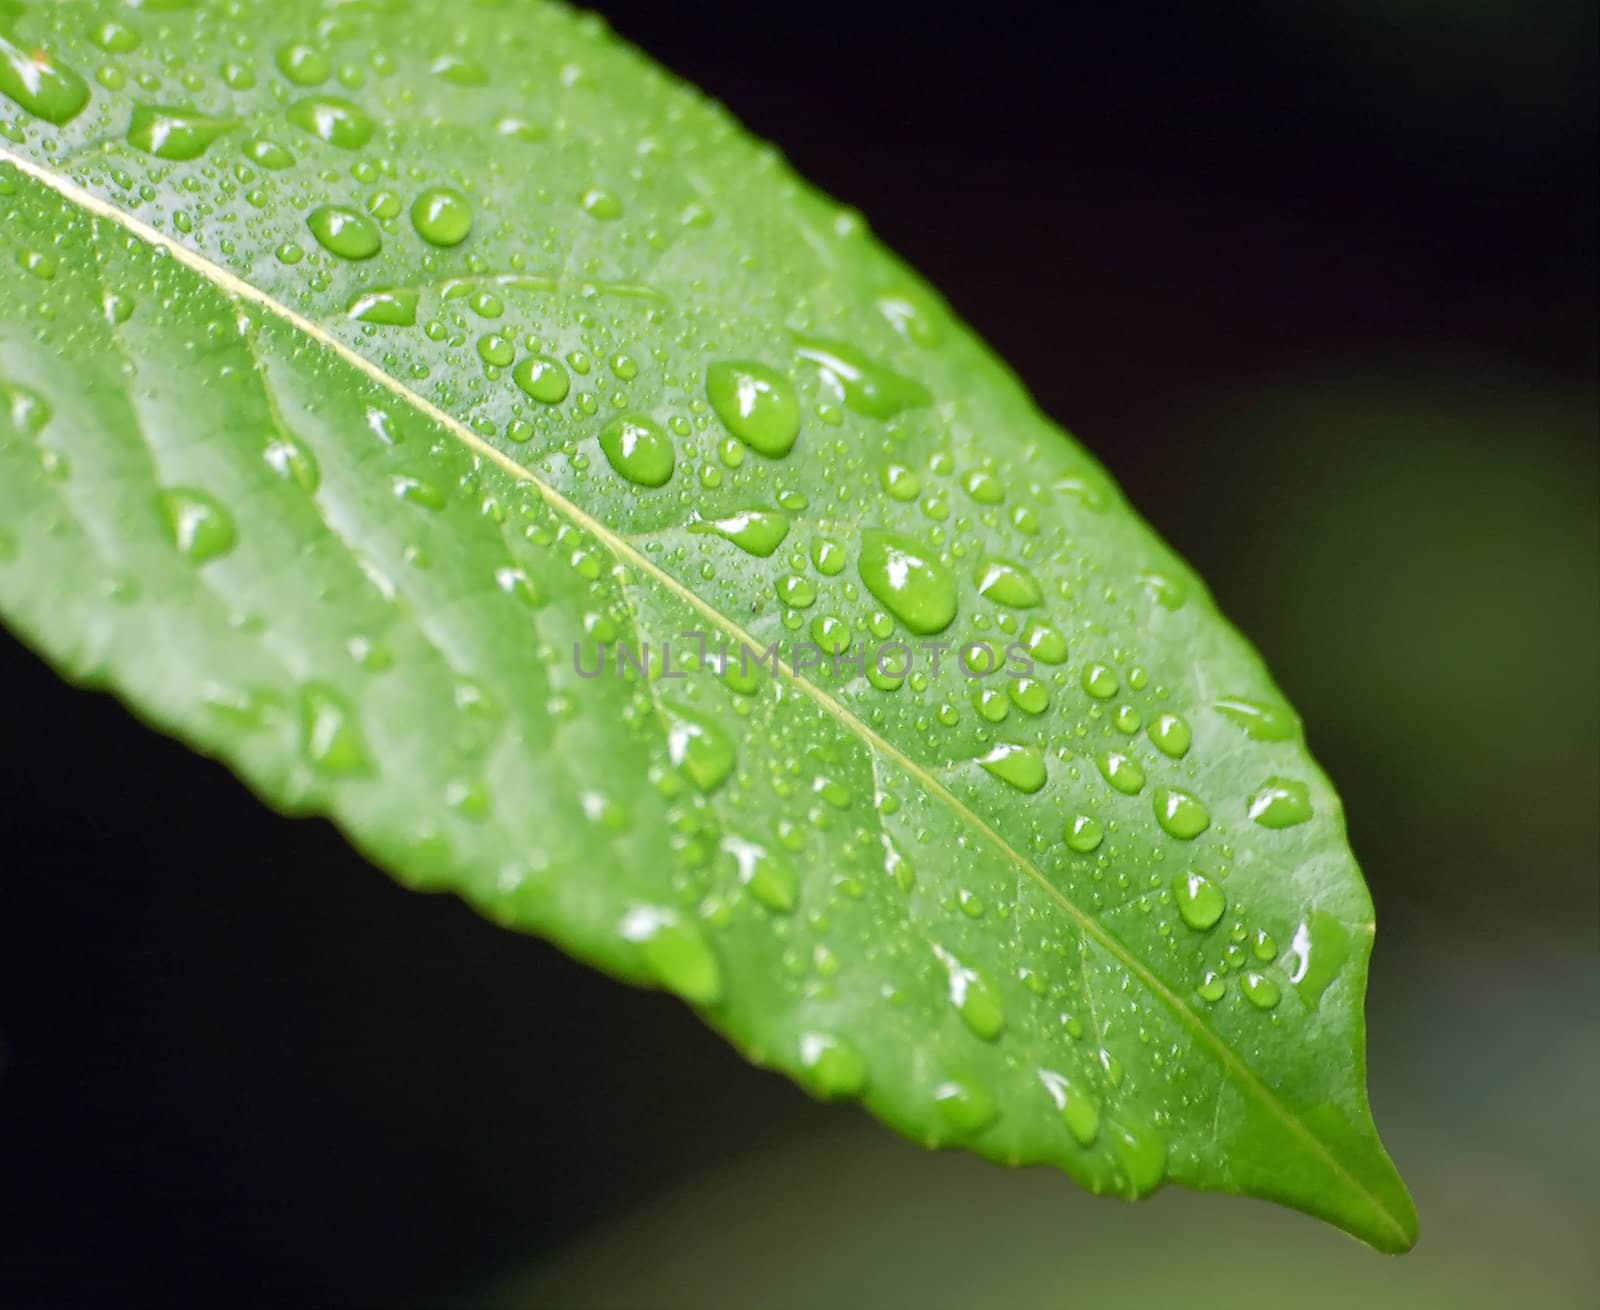 Raindrops on leaf by nialat